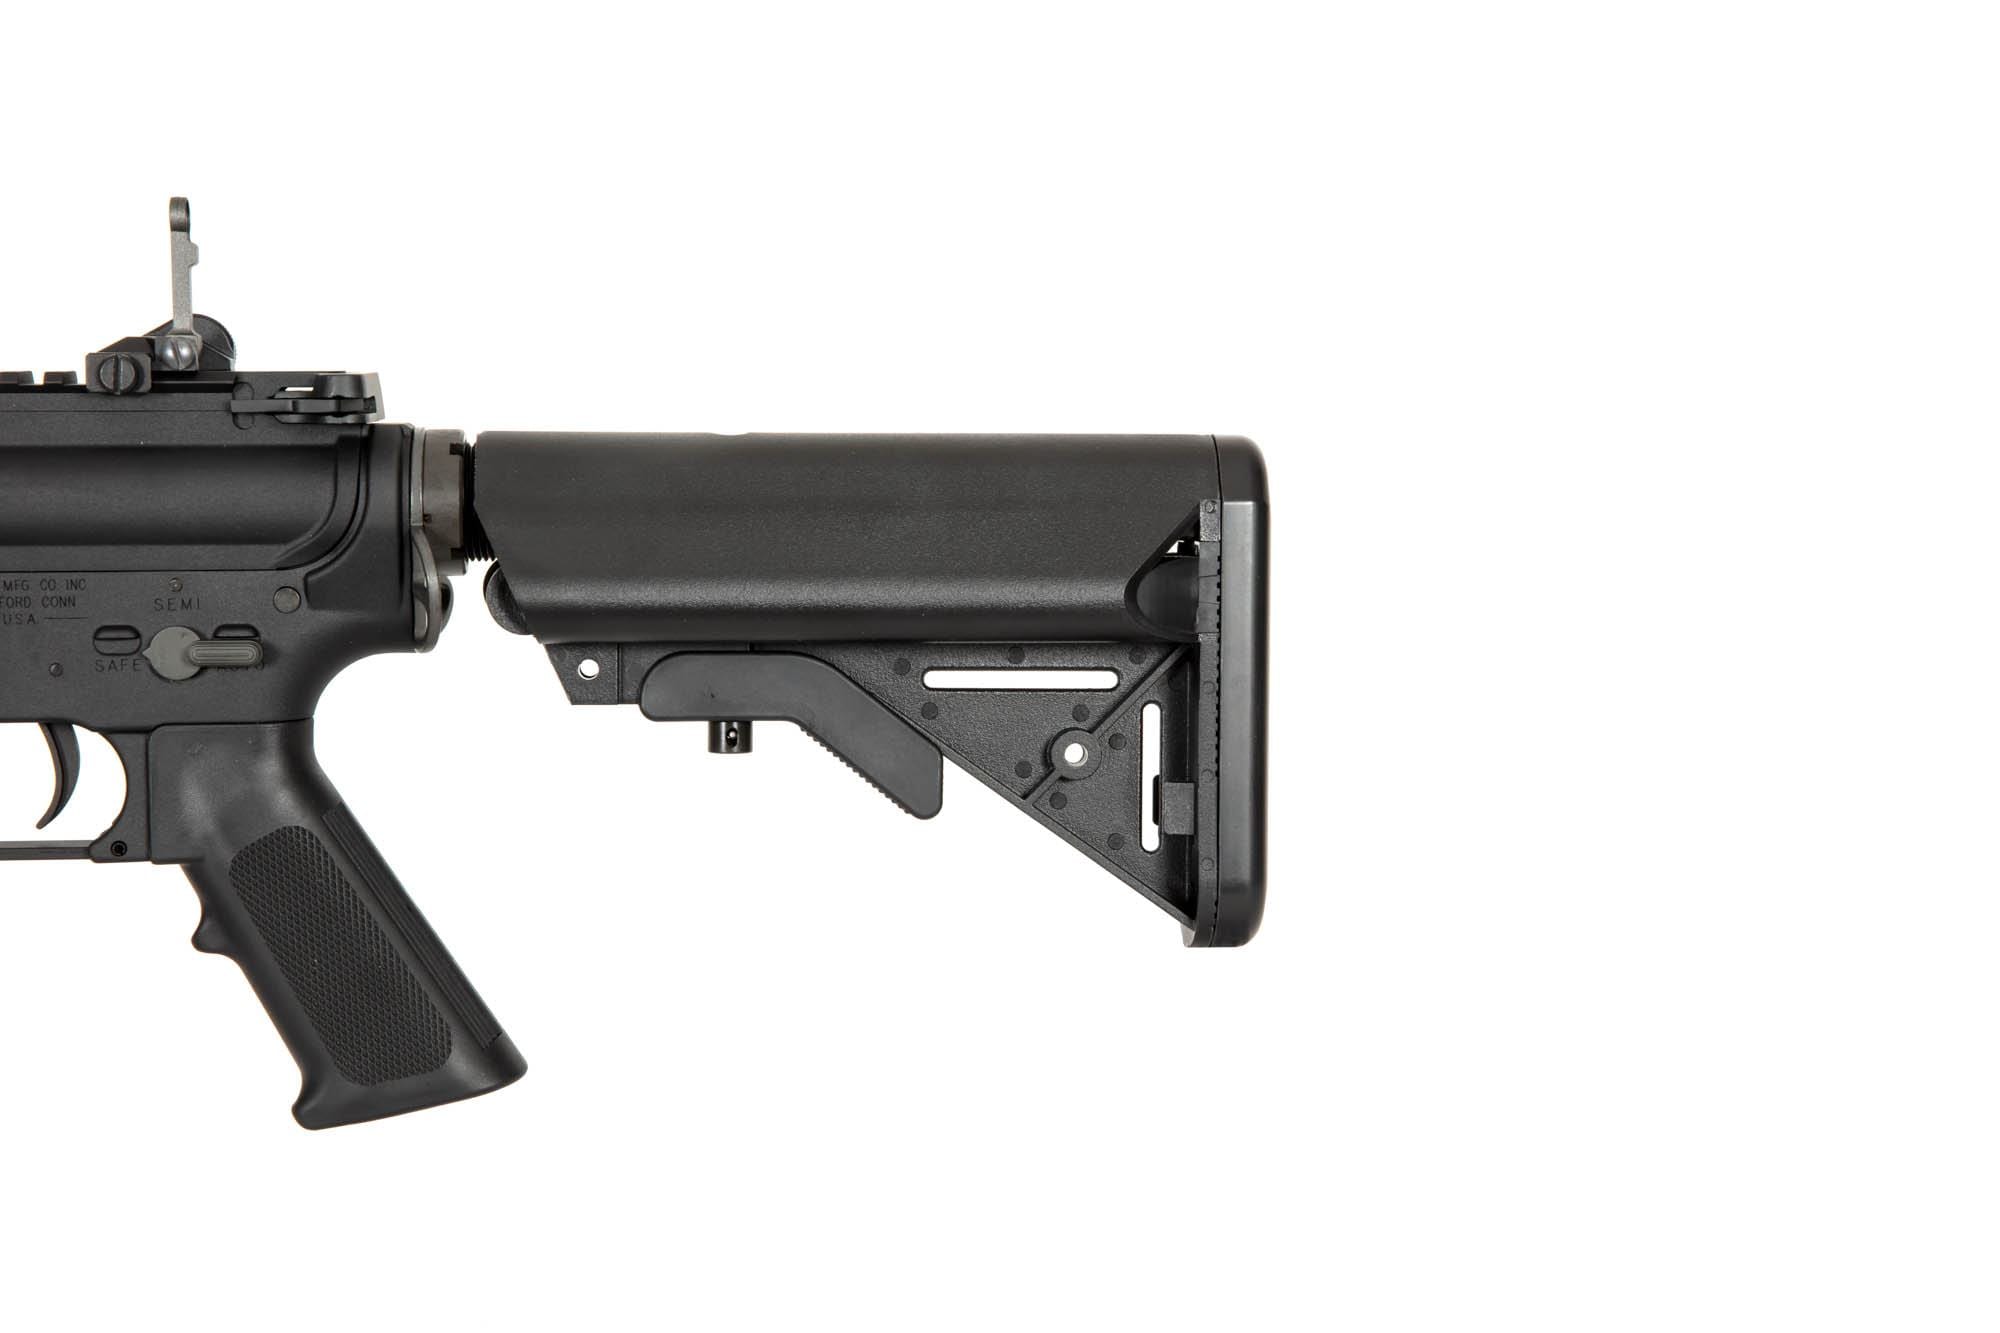 VF1-LMK18M1 (Colt MK18 MOD 1) Carbine Replica - black by VFC on Airsoft Mania Europe